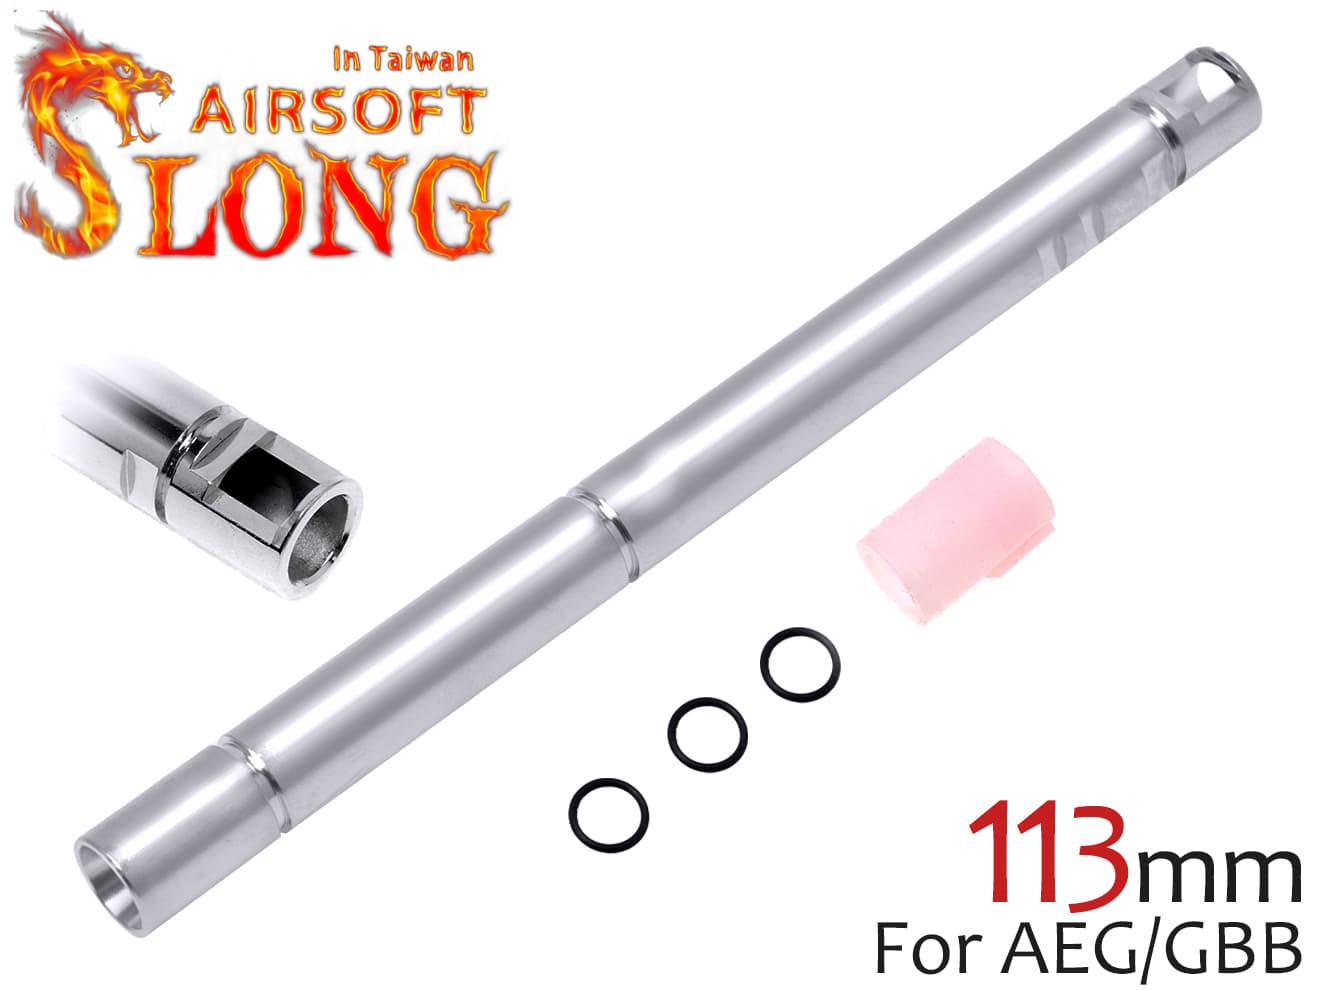 SLONG AIRSOFT AEG/GBB Φ6.03 ストーム インナーバレル 113mm◆電動ガスブロ兼用設計 フラットホップ対応 精密タイトバレル ハイキャパ5.1